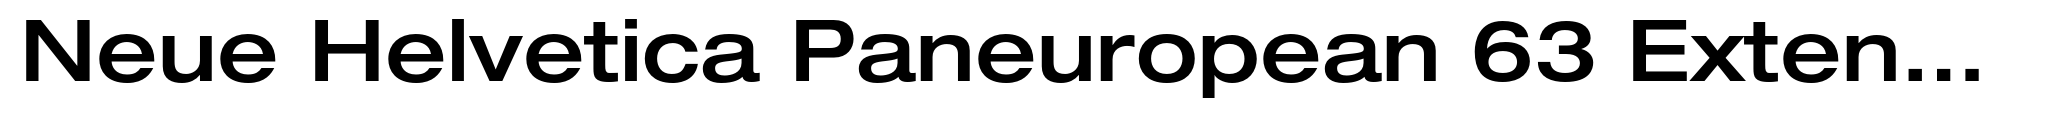 Neue Helvetica Paneuropean 63 Extended Medium image